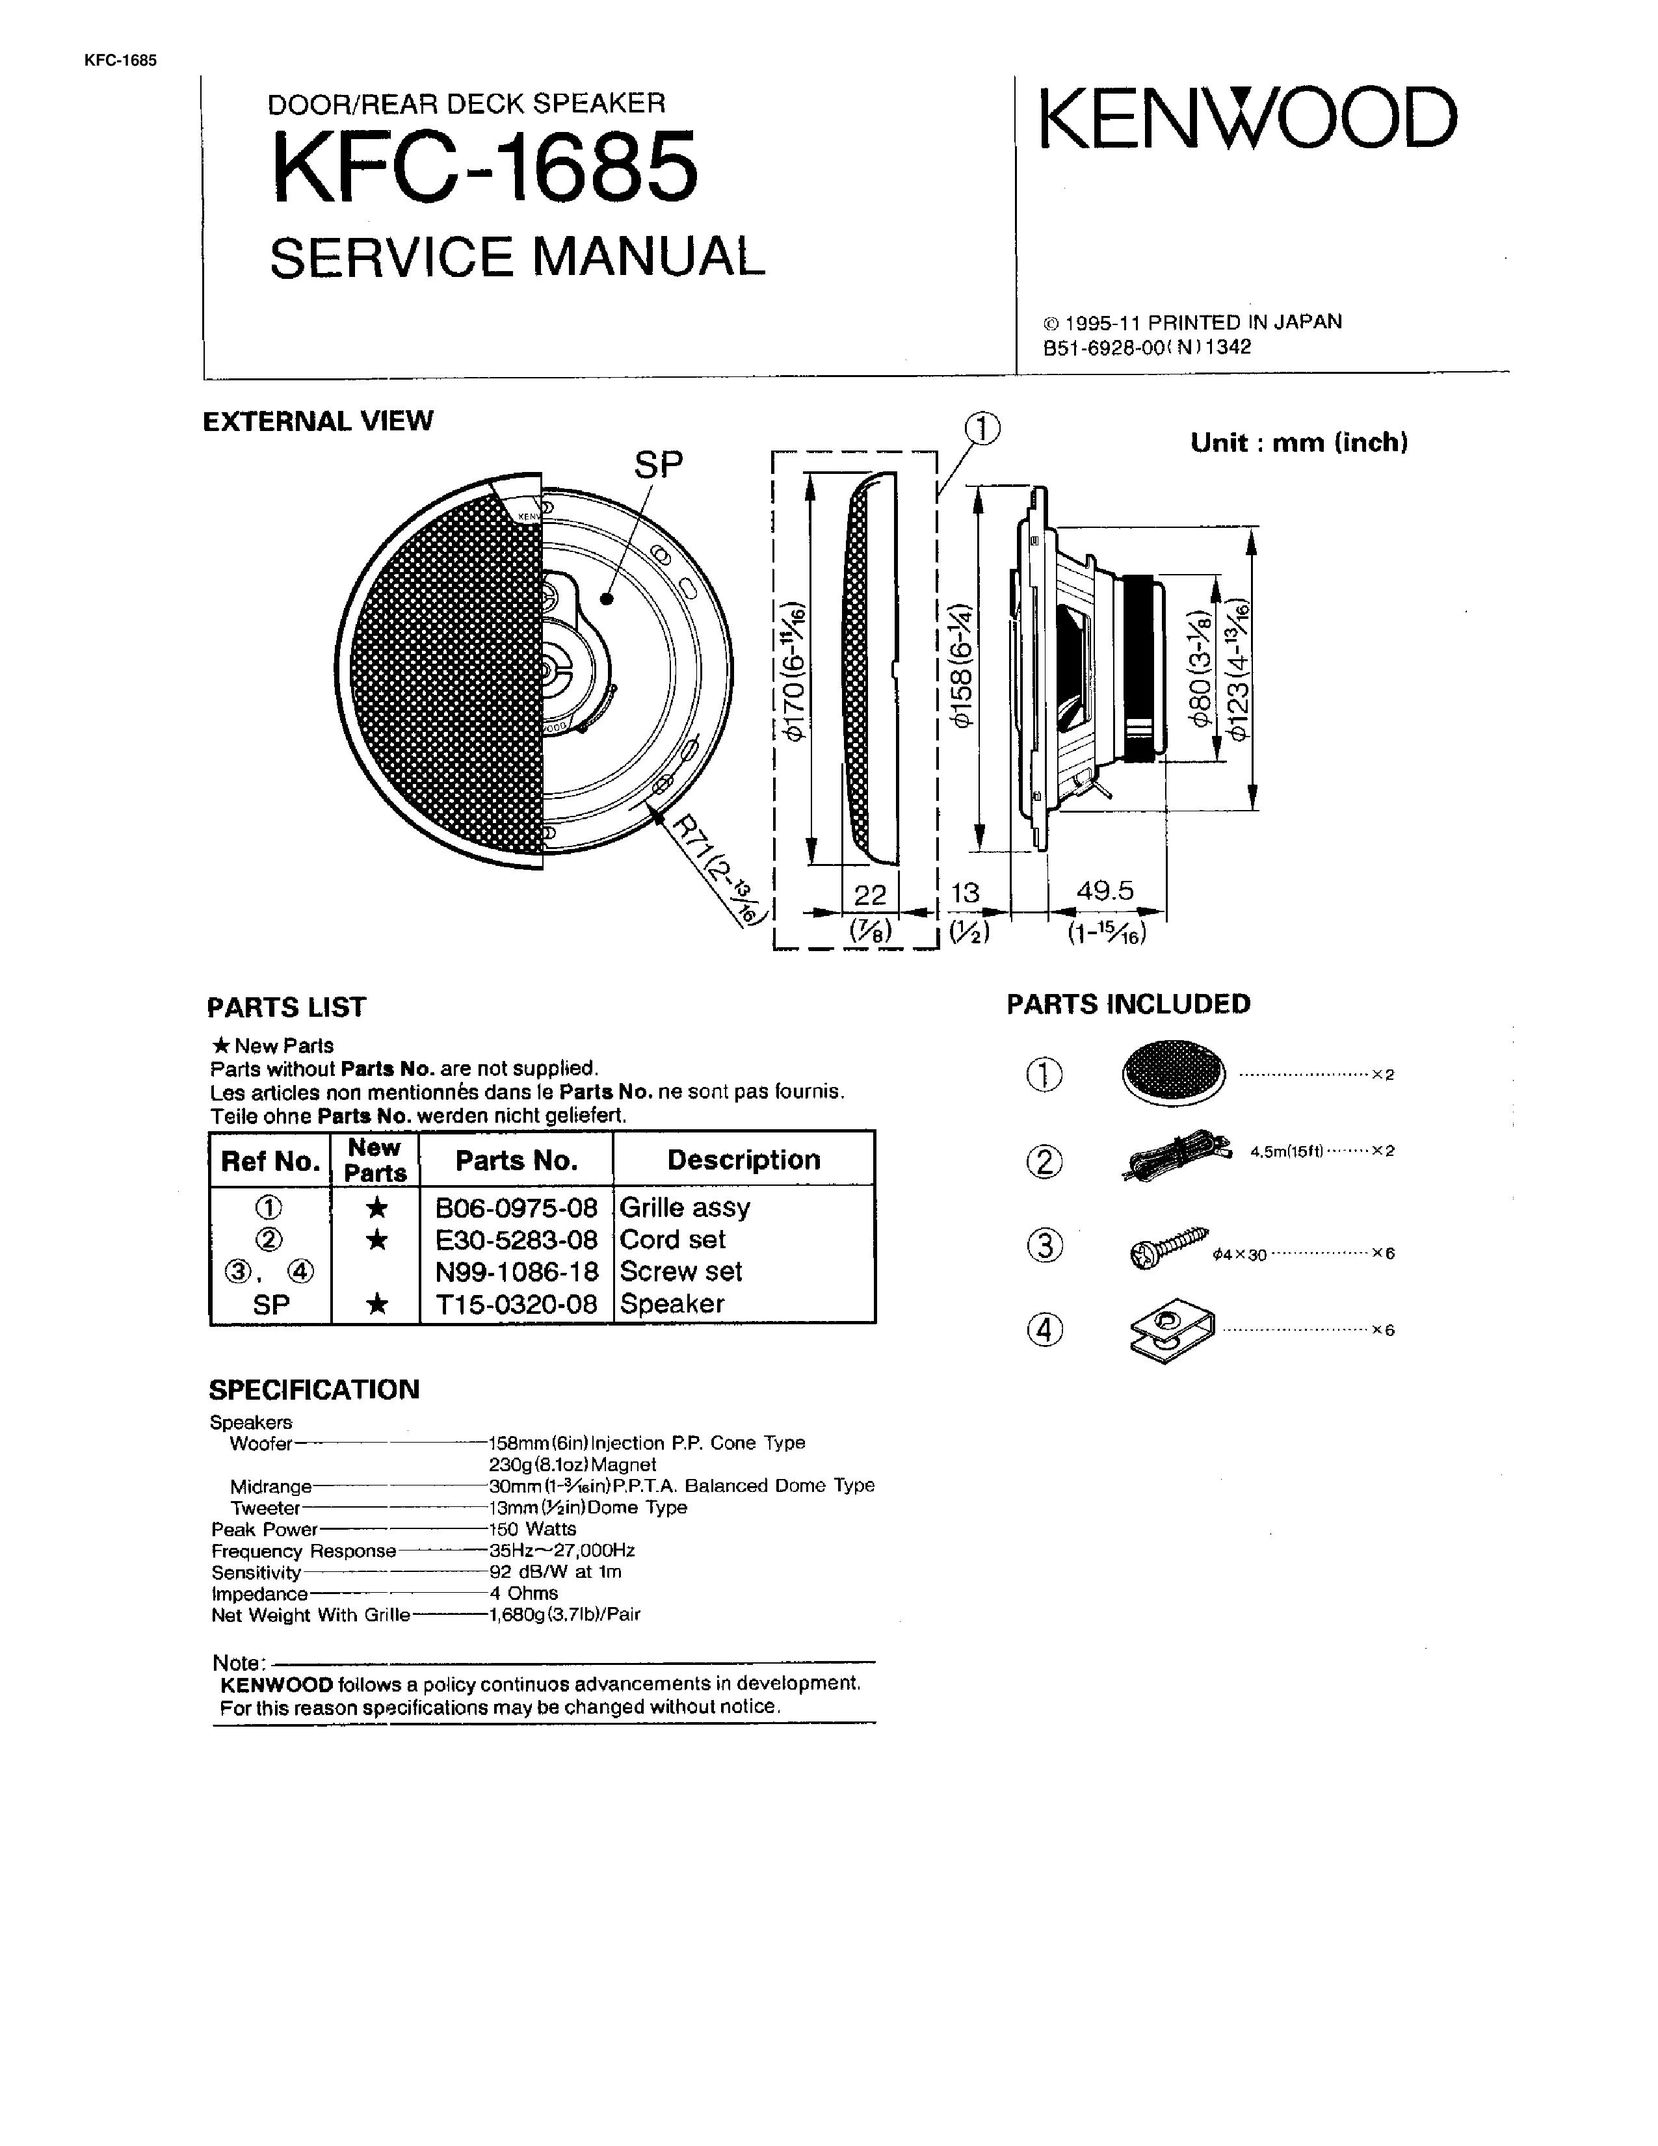 Kenwood KFC-1685 Car Speaker User Manual